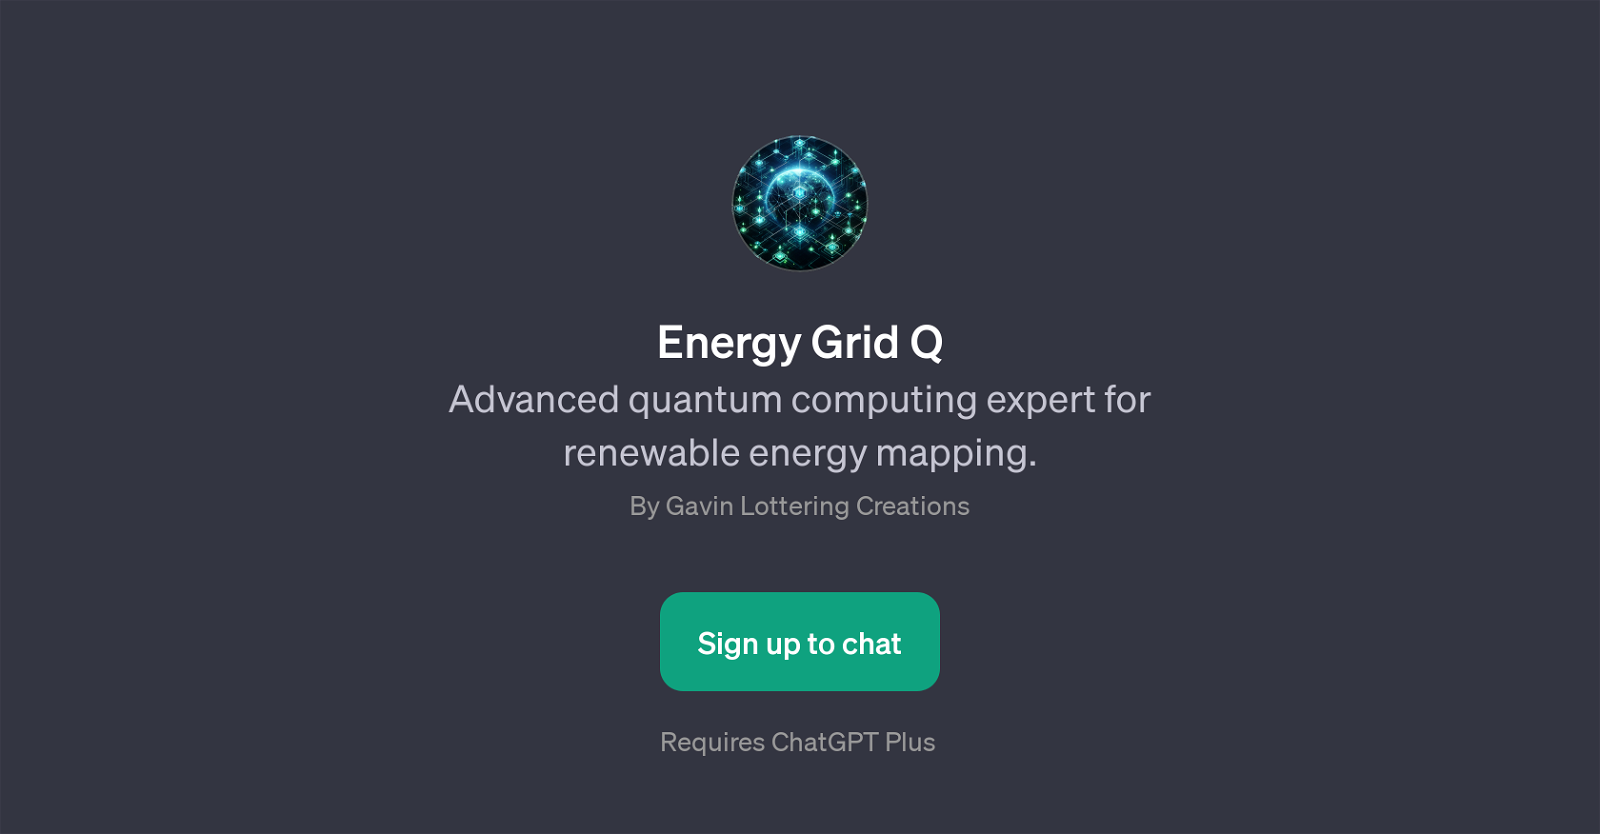 Energy Grid Q website